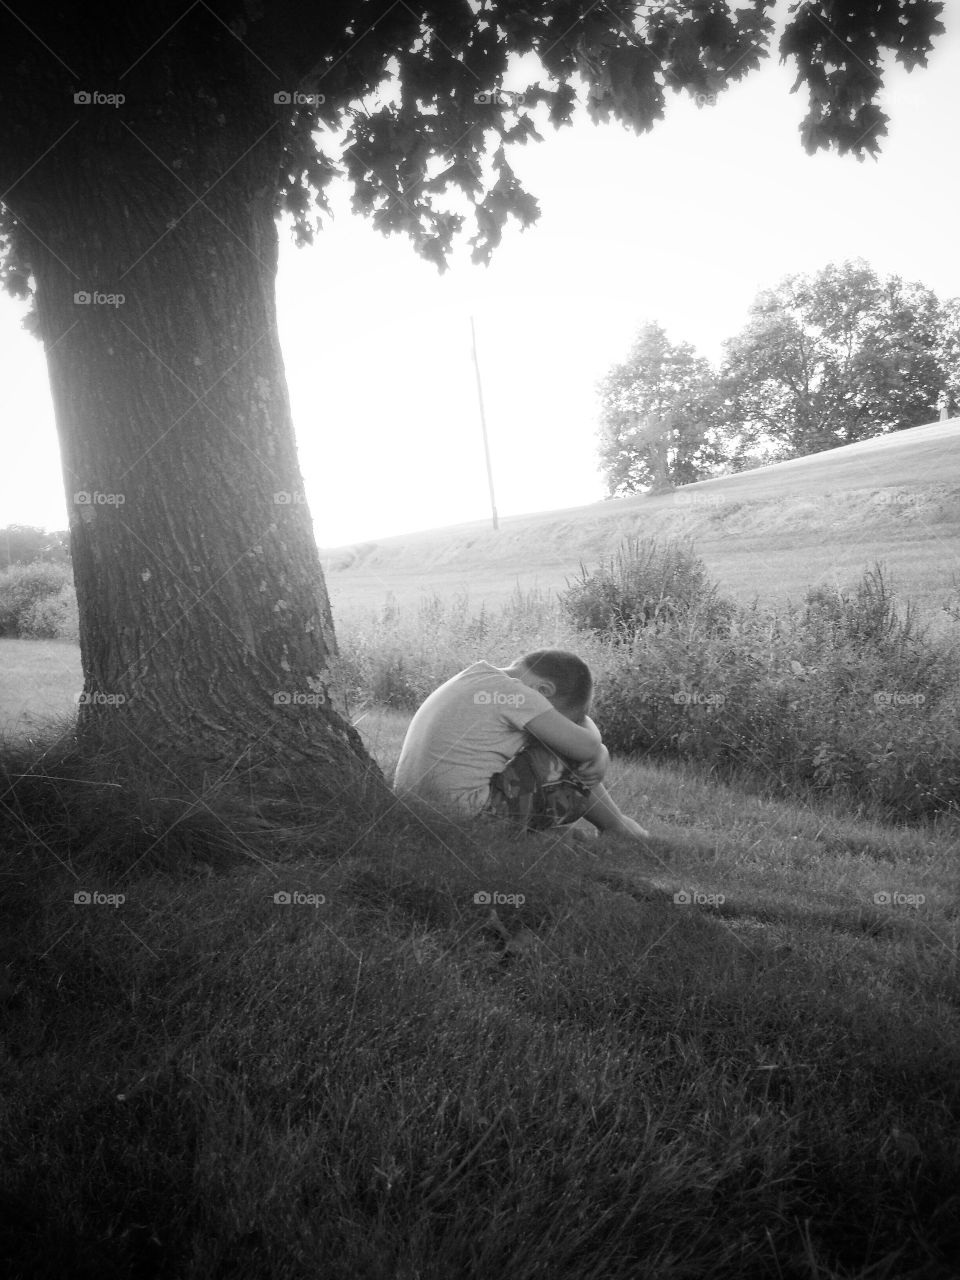 Small child sitting near tree trunk